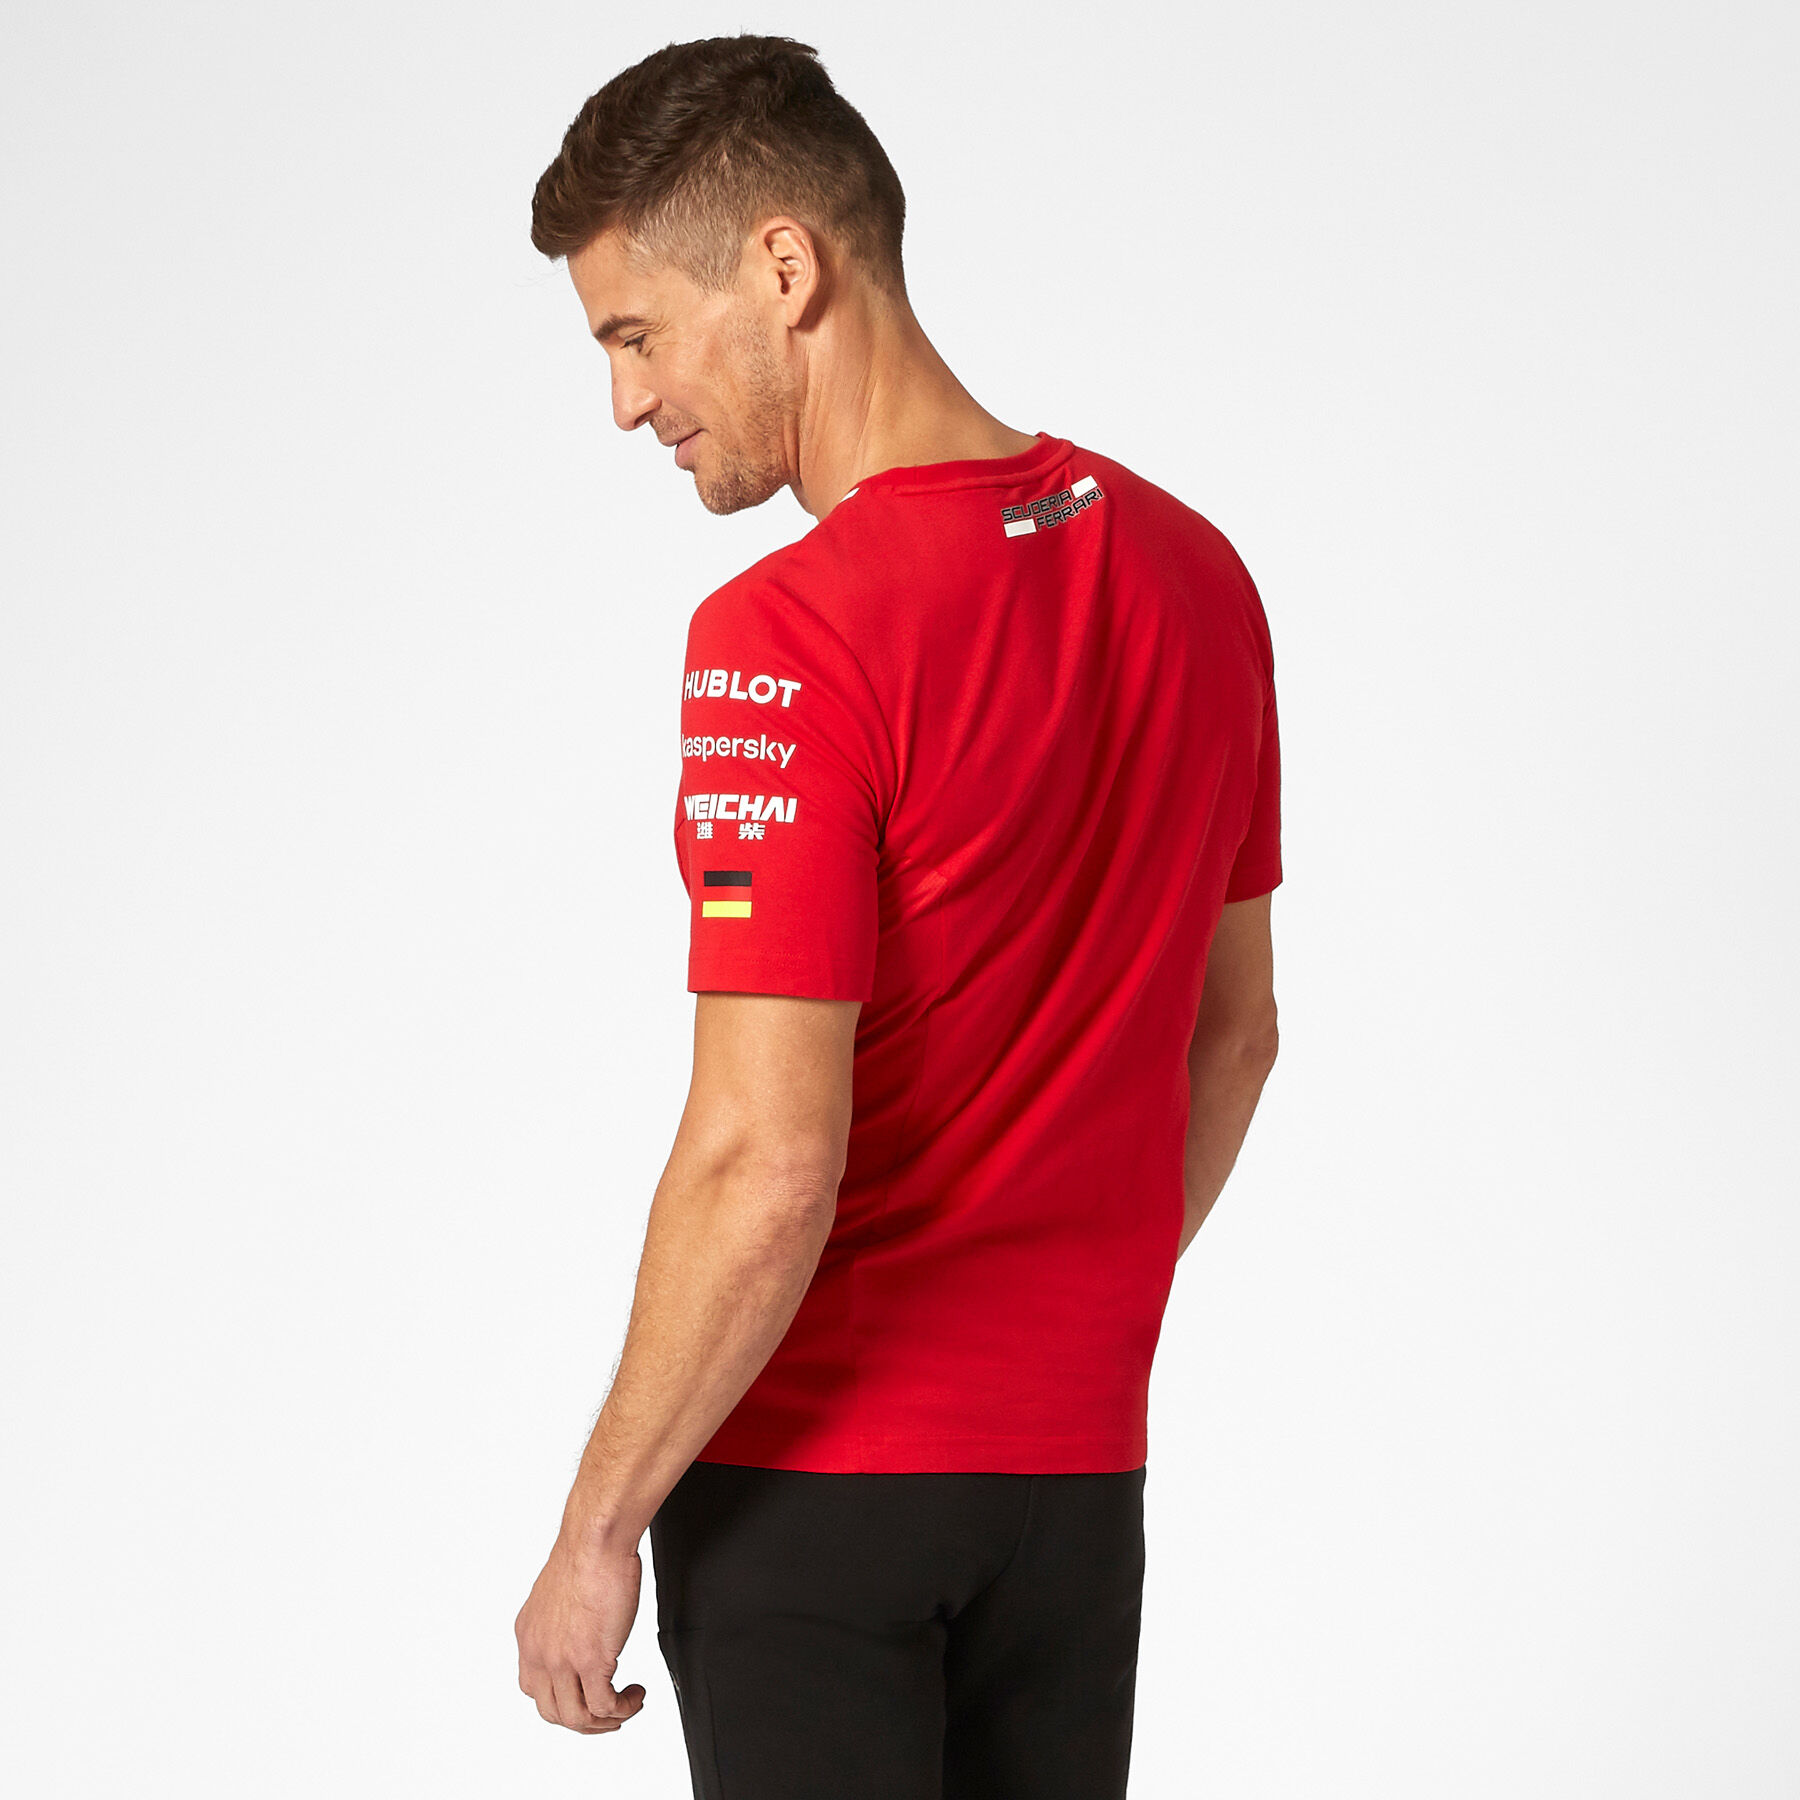 Leclerc NEW 2020 Scuderia FERRARI F1 Team Zip POLO Shirt Top MENS Red Vettel 